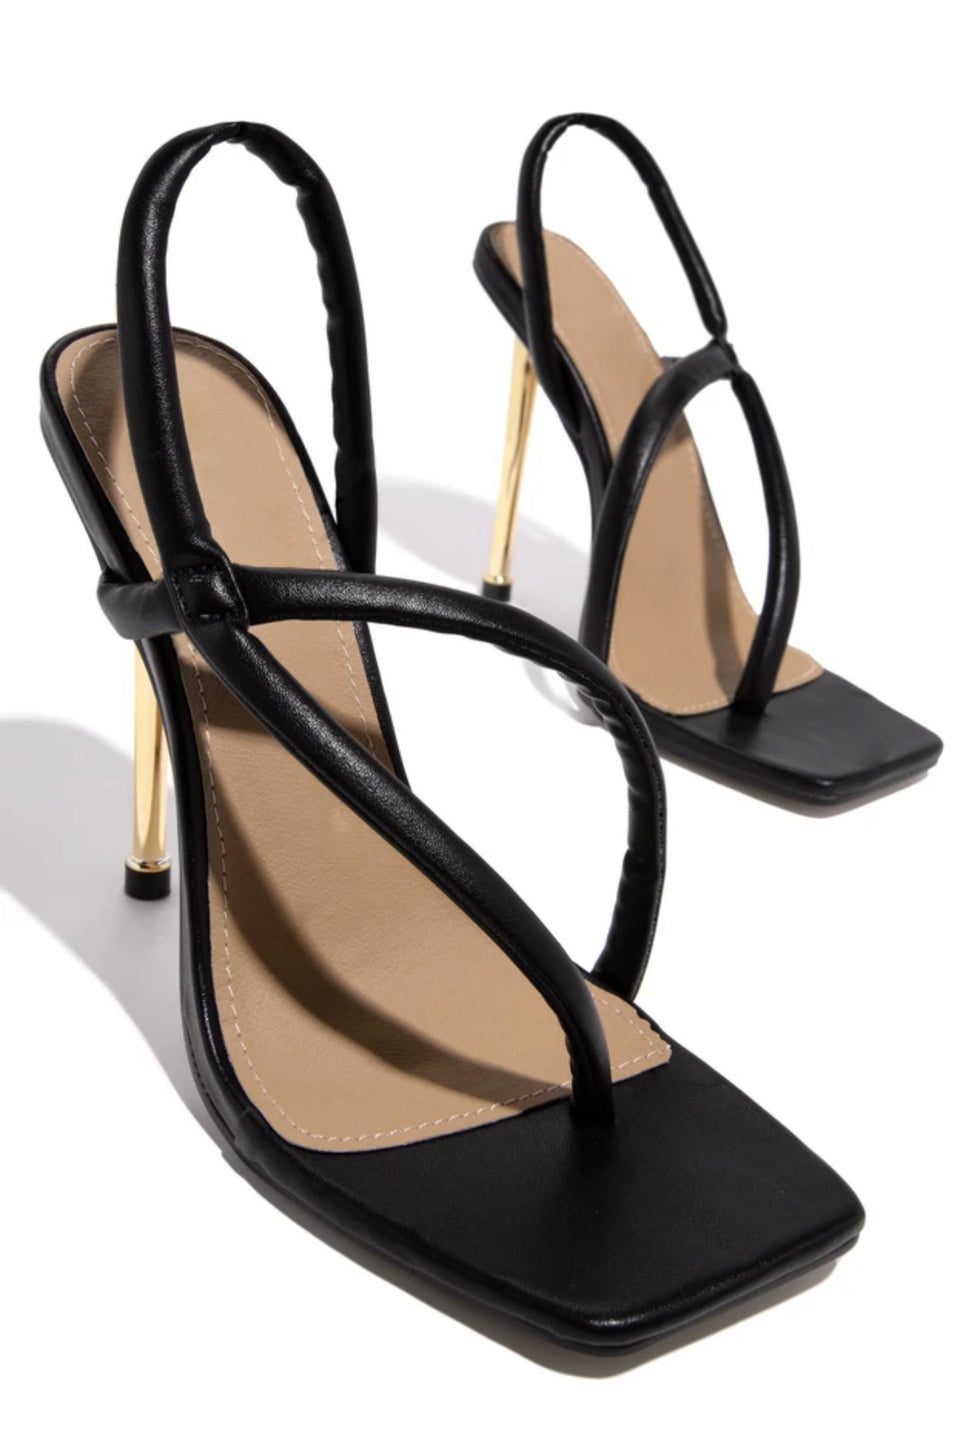 Court Shoe Black Heel Woman Shoe Fashion Stylish Ankle Summer Cheap Top  Black | eBay